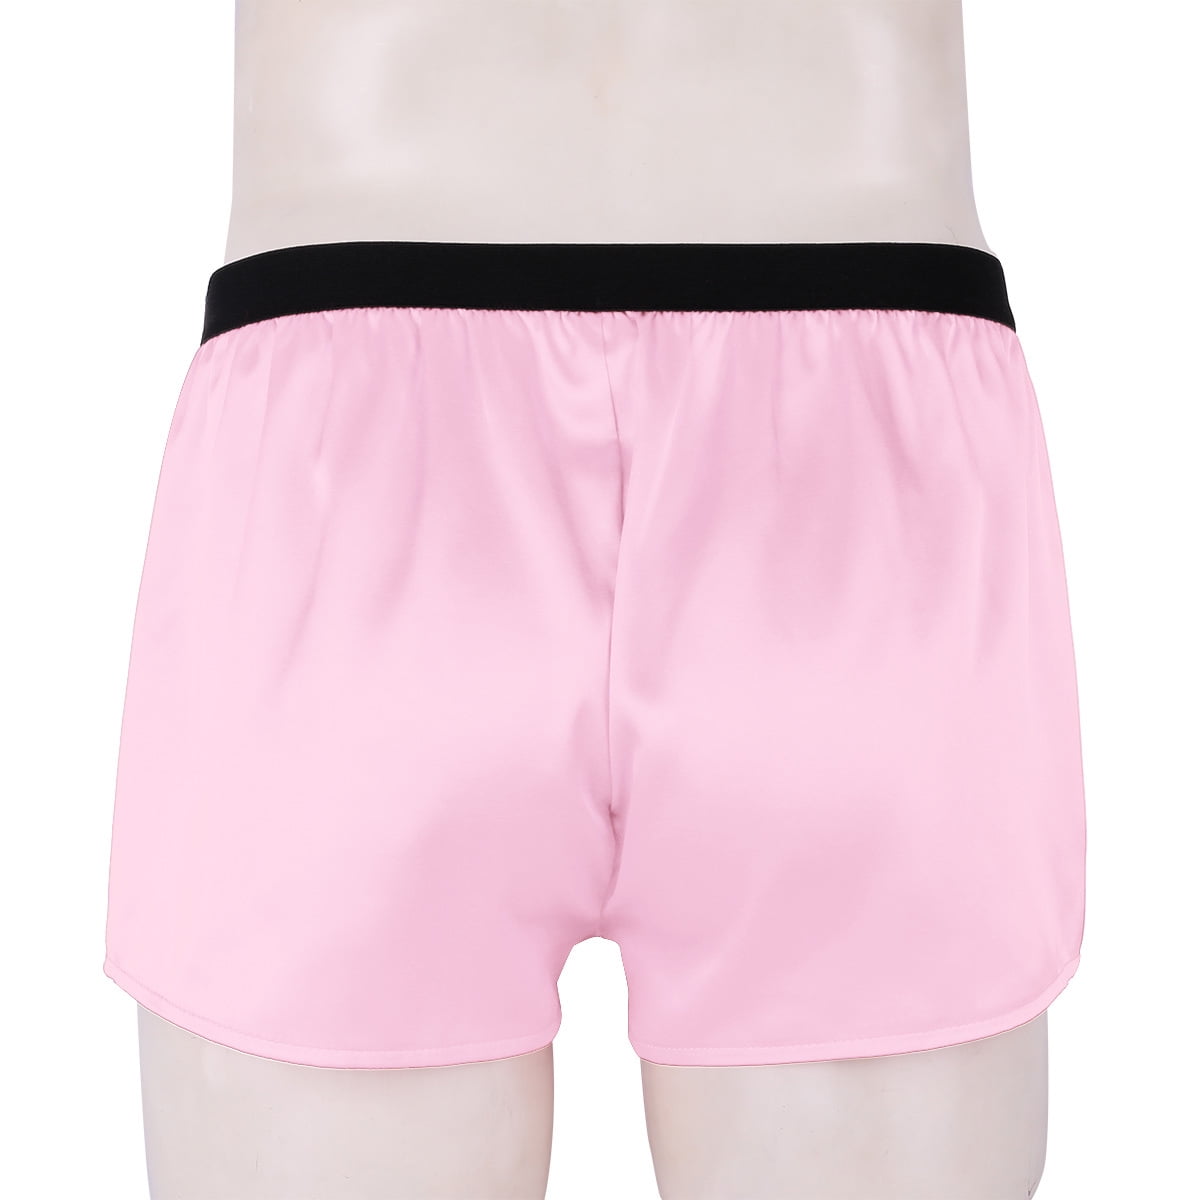 MSemis Men's Silky Satin Boxers Shorts Summer Lounge Underwear